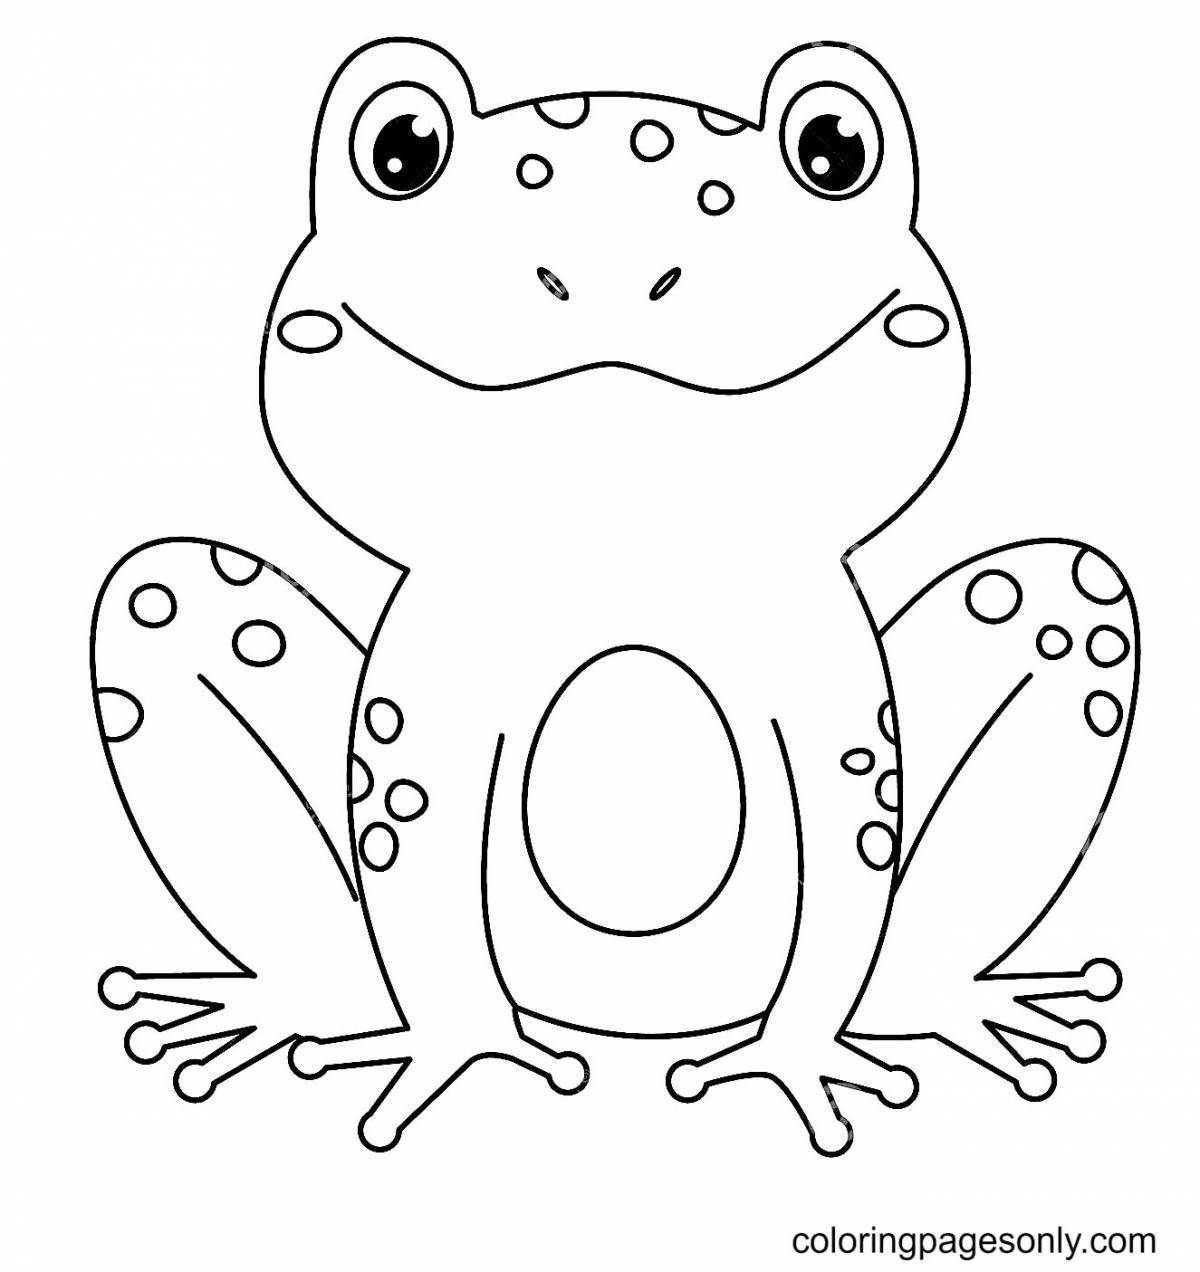 Attractive tree frog coloring book